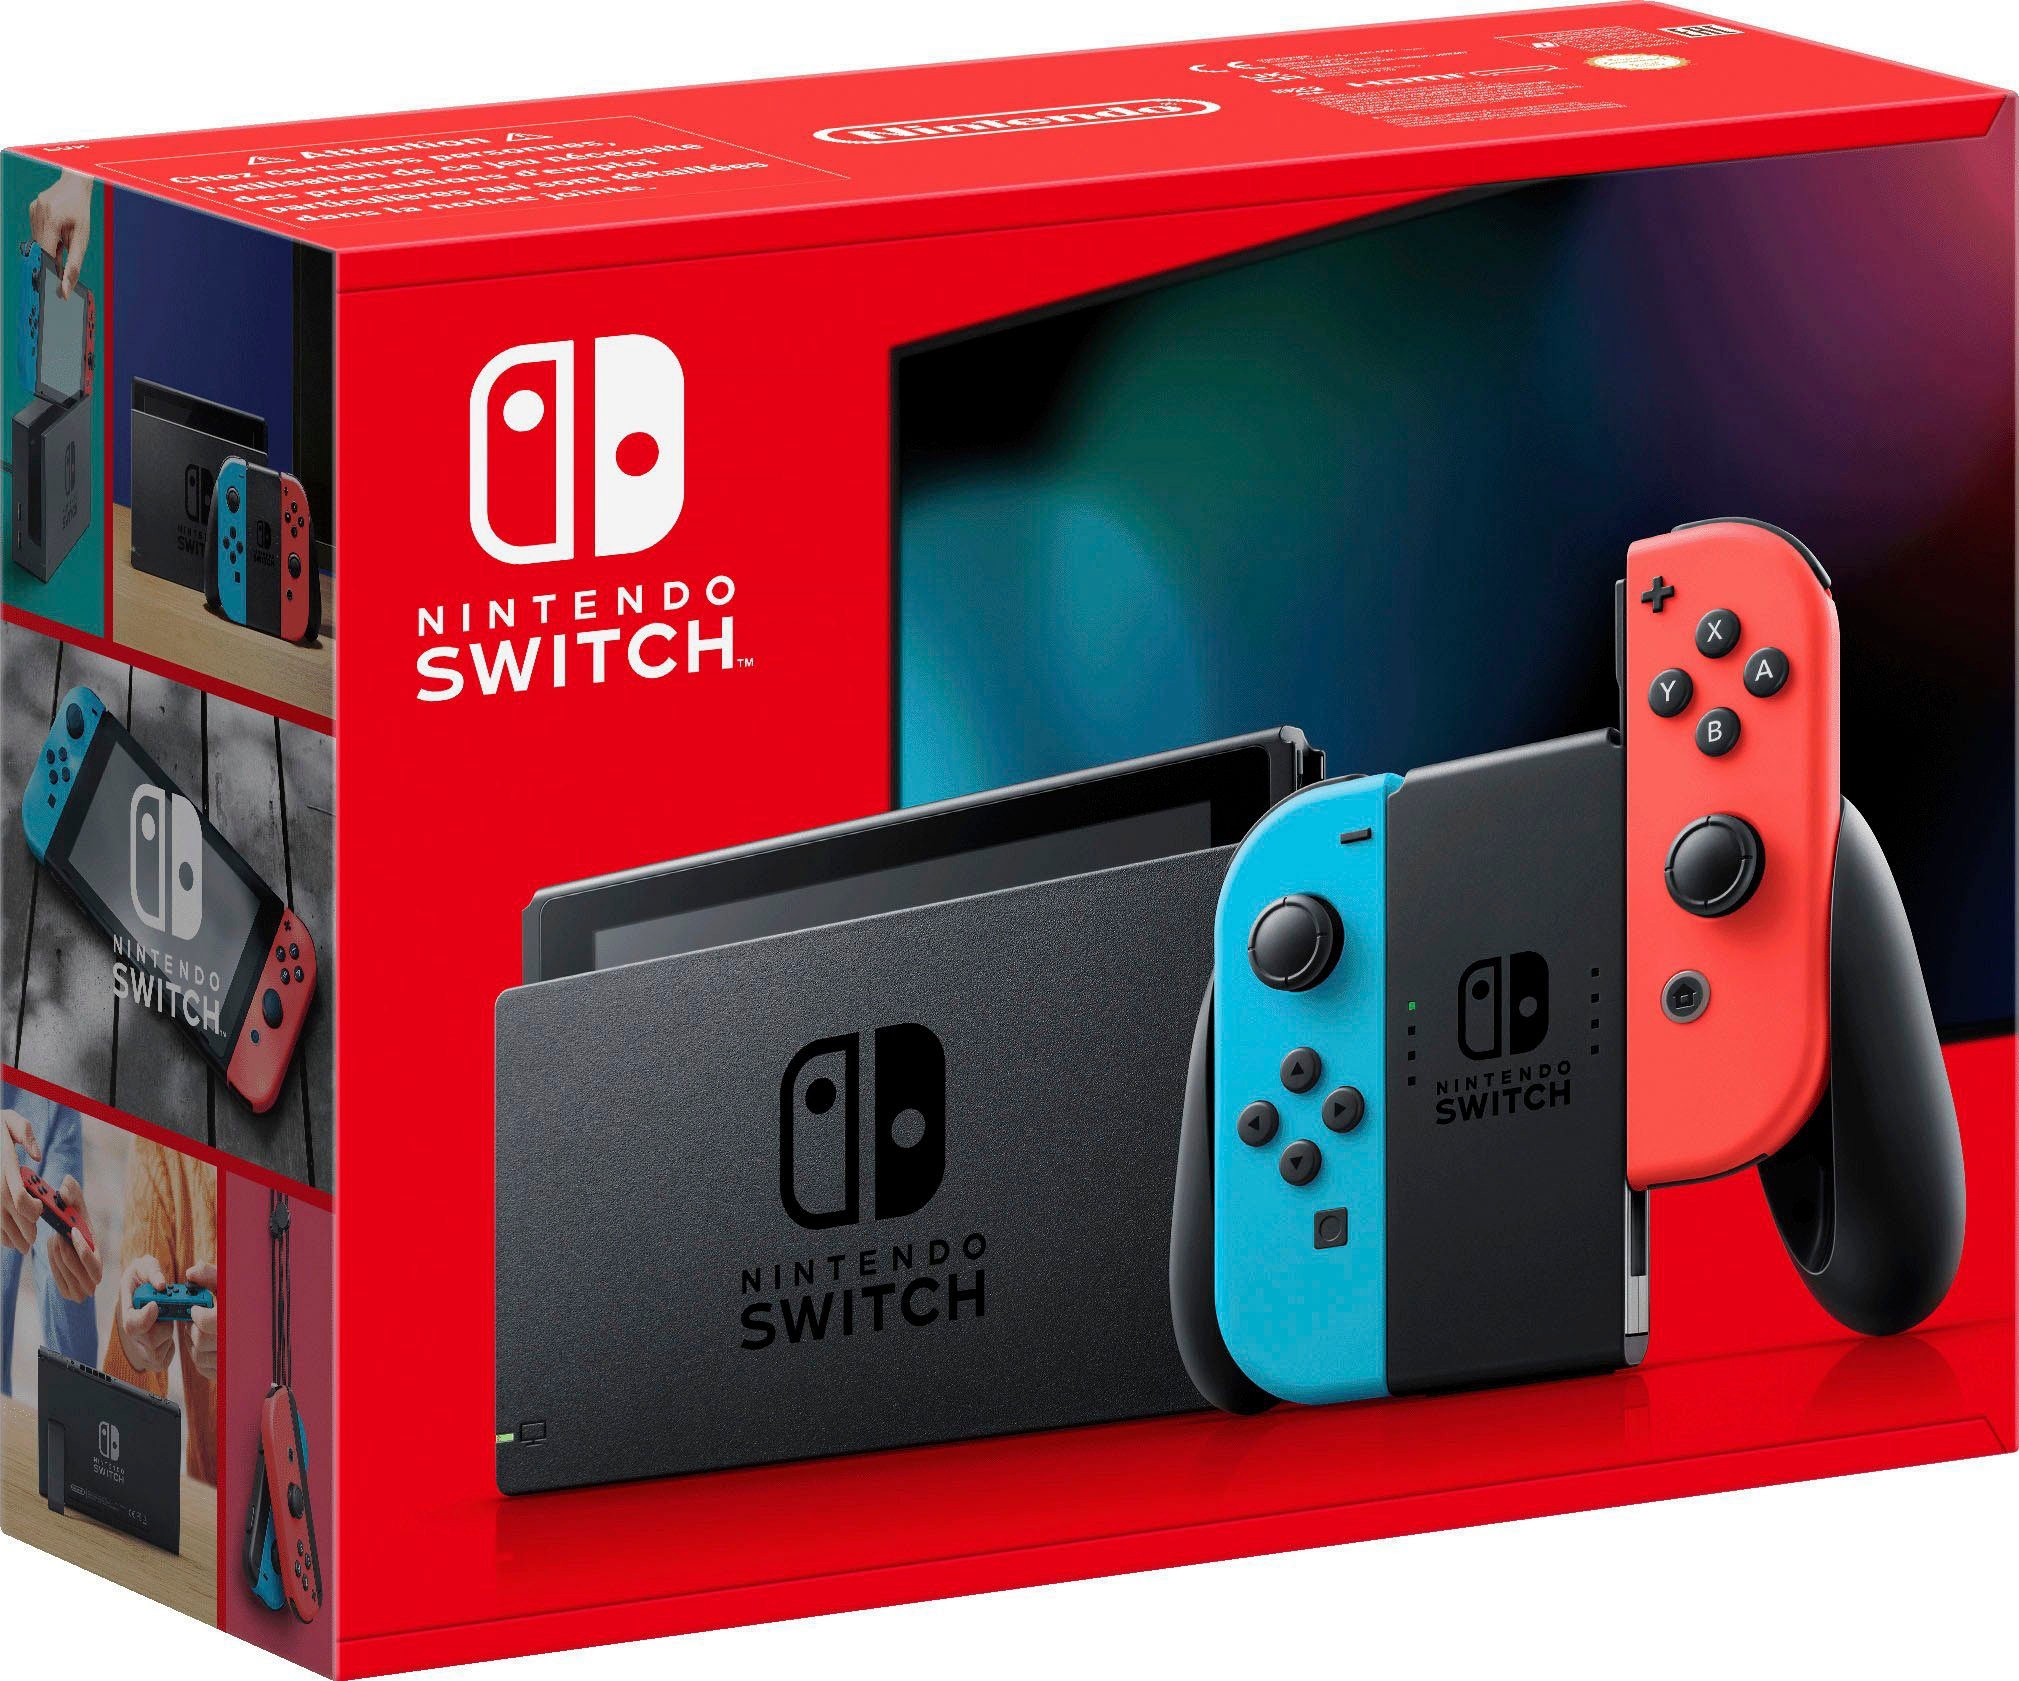 Nintendo Switch Konsolen-Set, Pokemon bei OTTO kaufen inkl. Karmesin